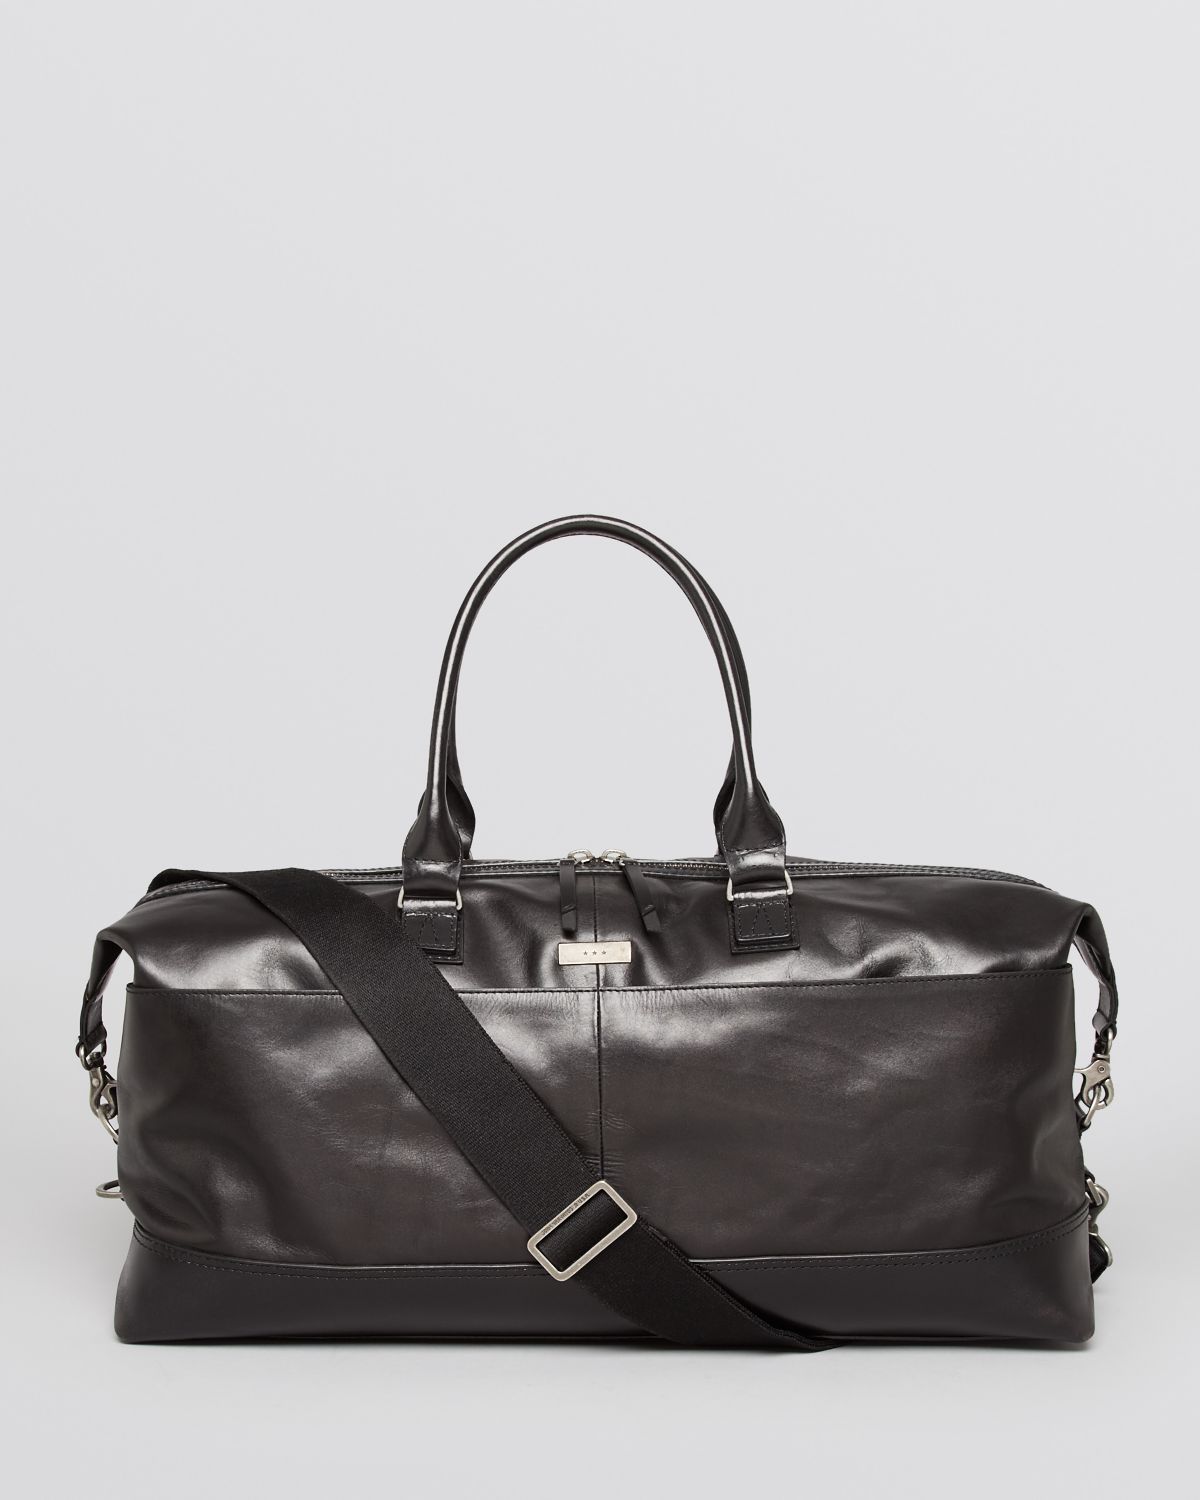 Lyst - John Varvatos Leather Duffel Bag in Black for Men